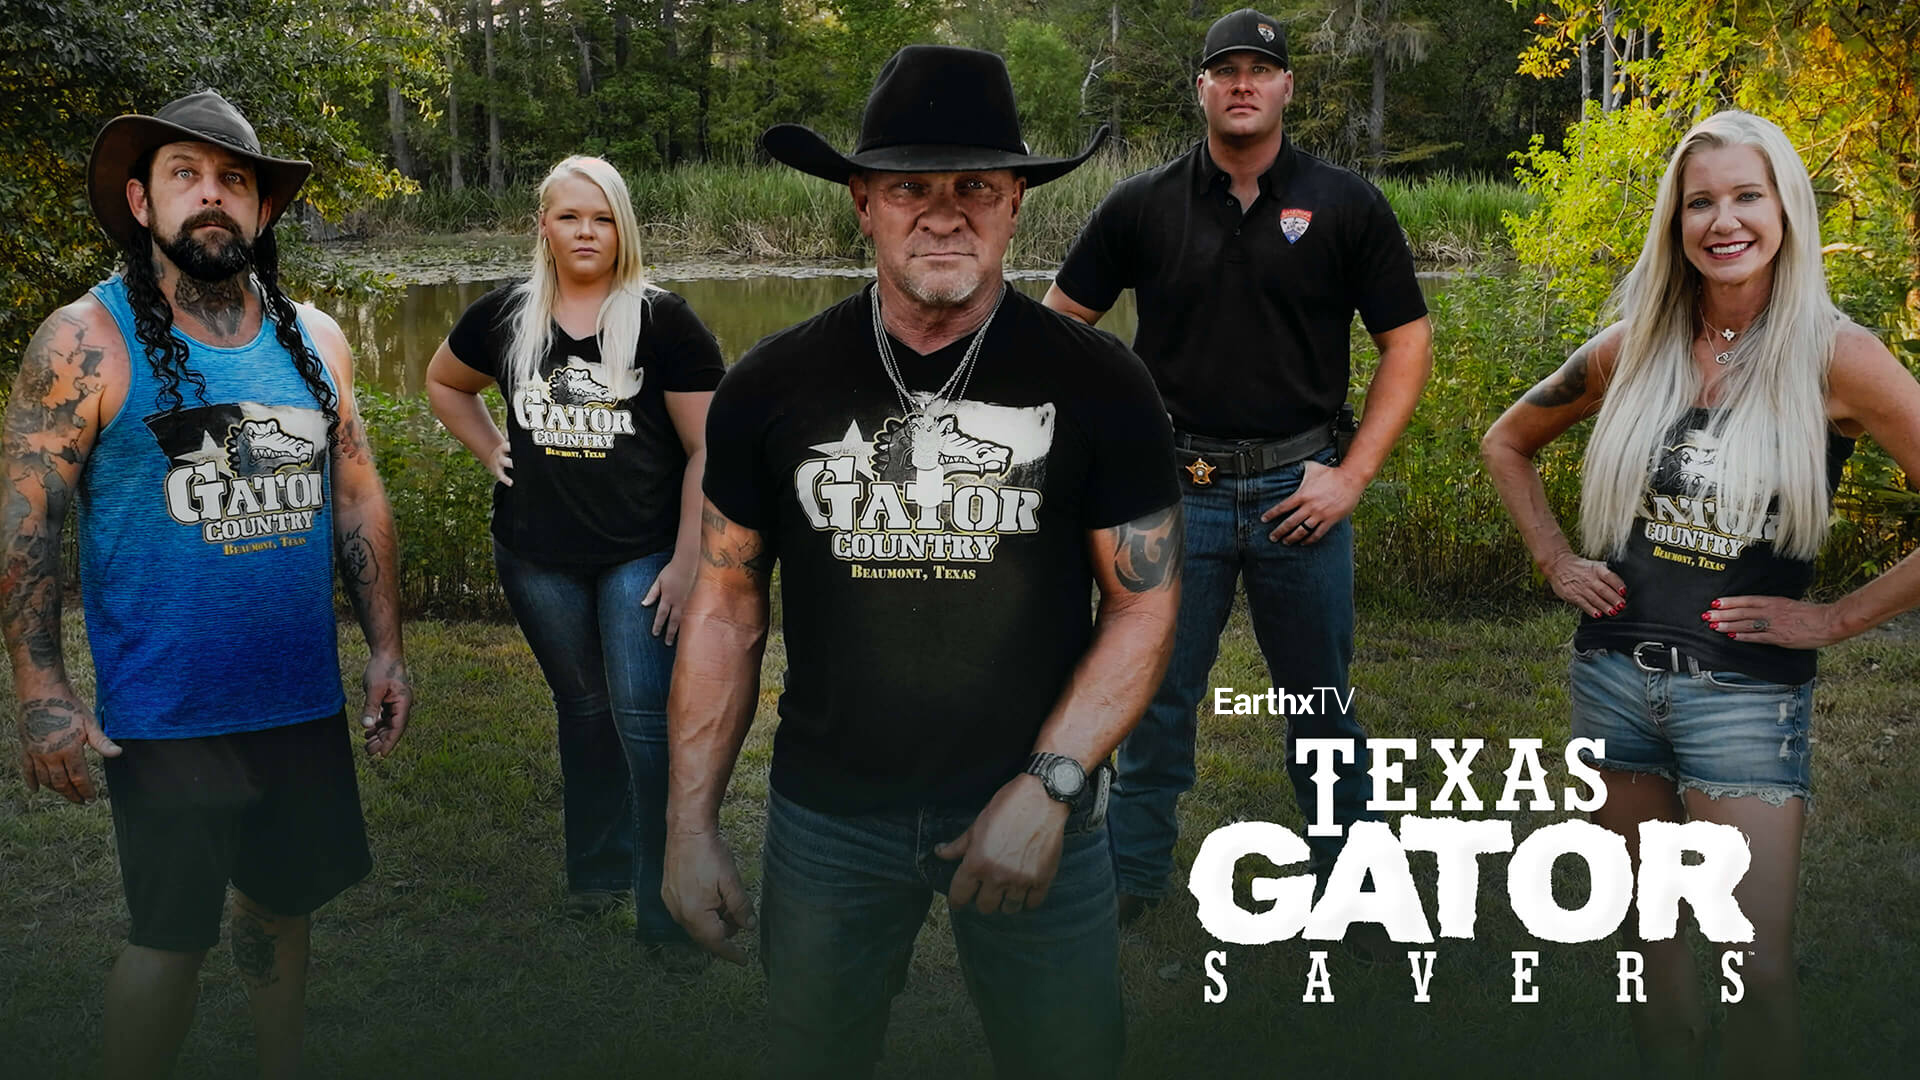 Texas Gator Savers